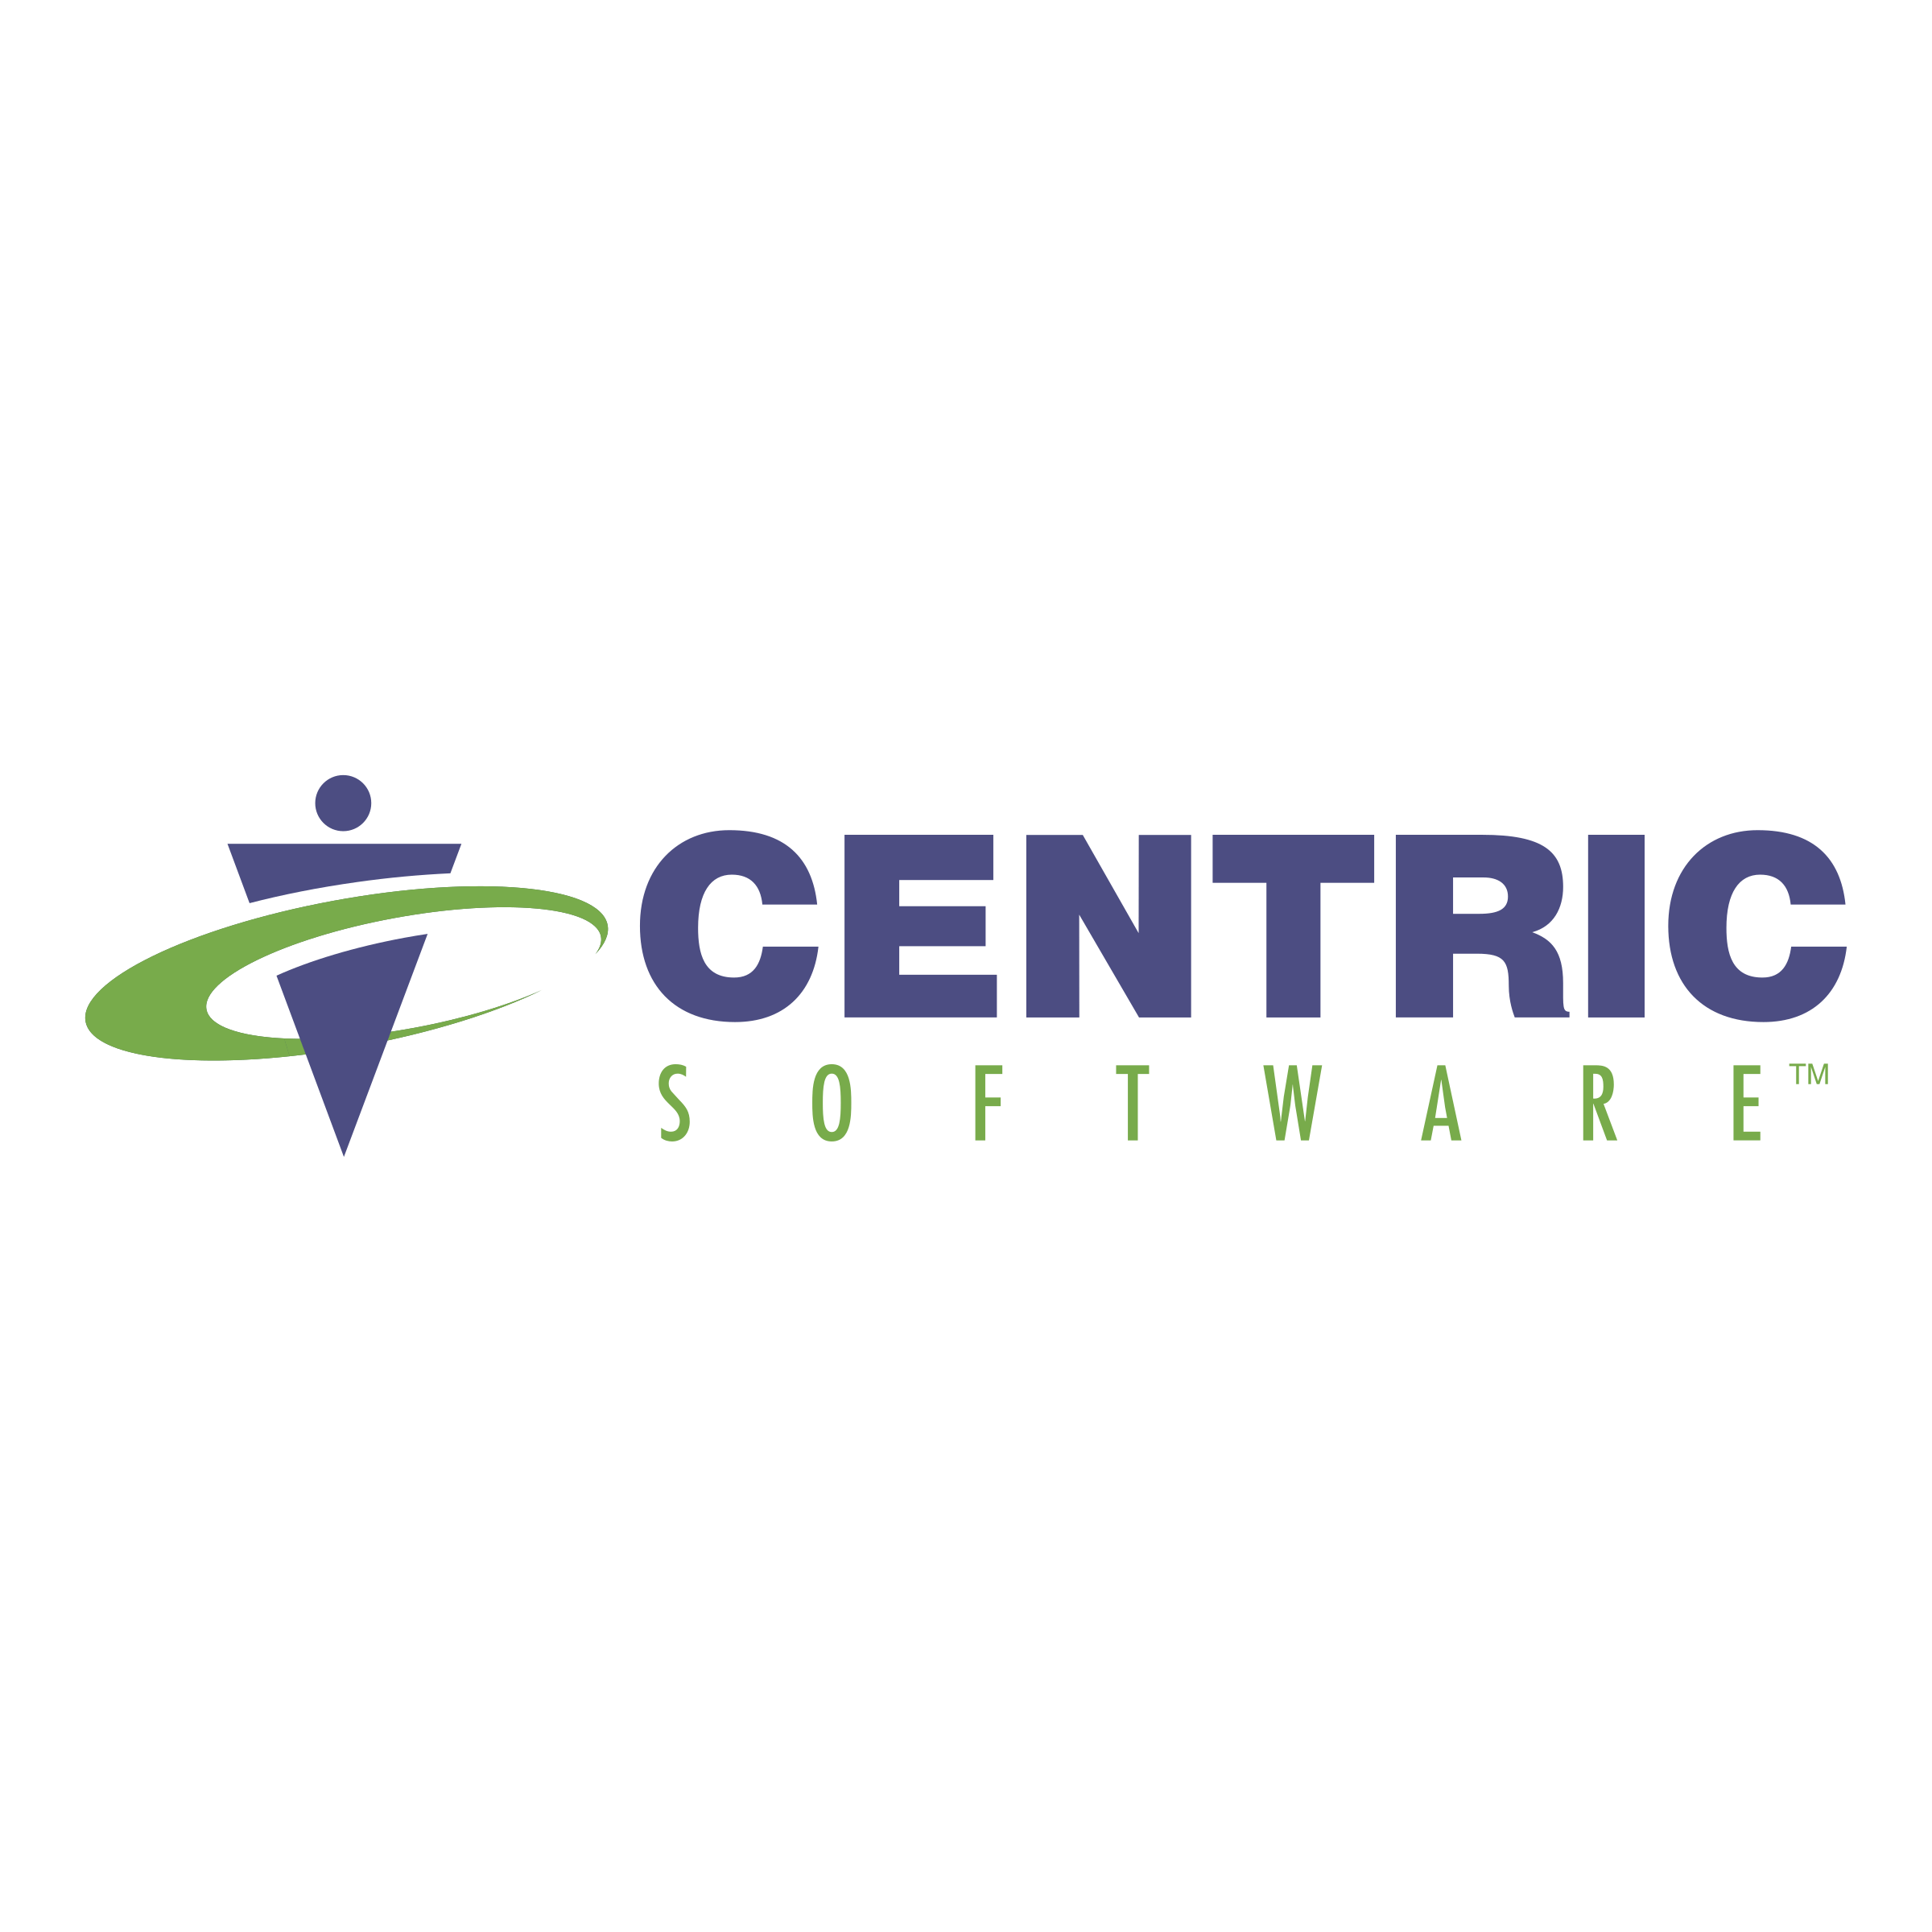 Centric Logo - Centric Software Logo PNG Transparent & SVG Vector - Freebie Supply